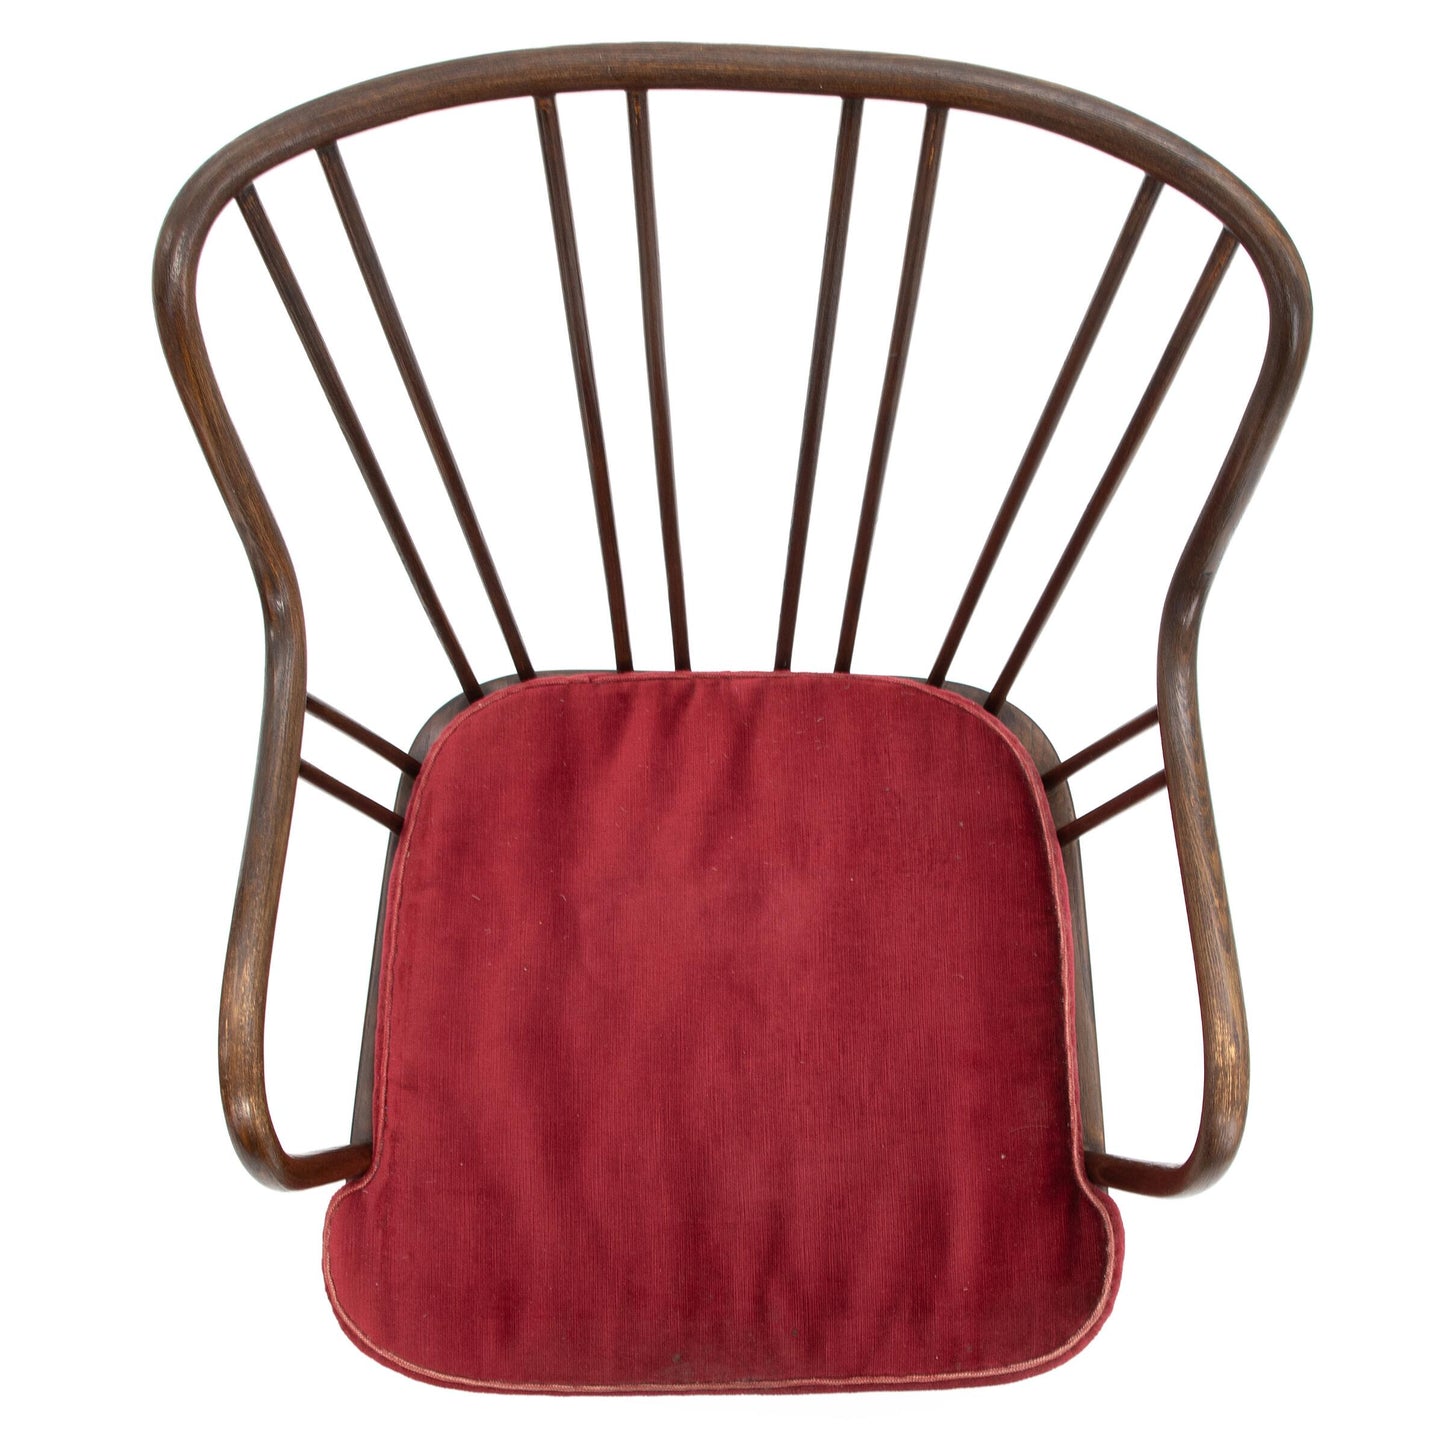 Aage Herman Olsen "The Lounge Chair" 1945